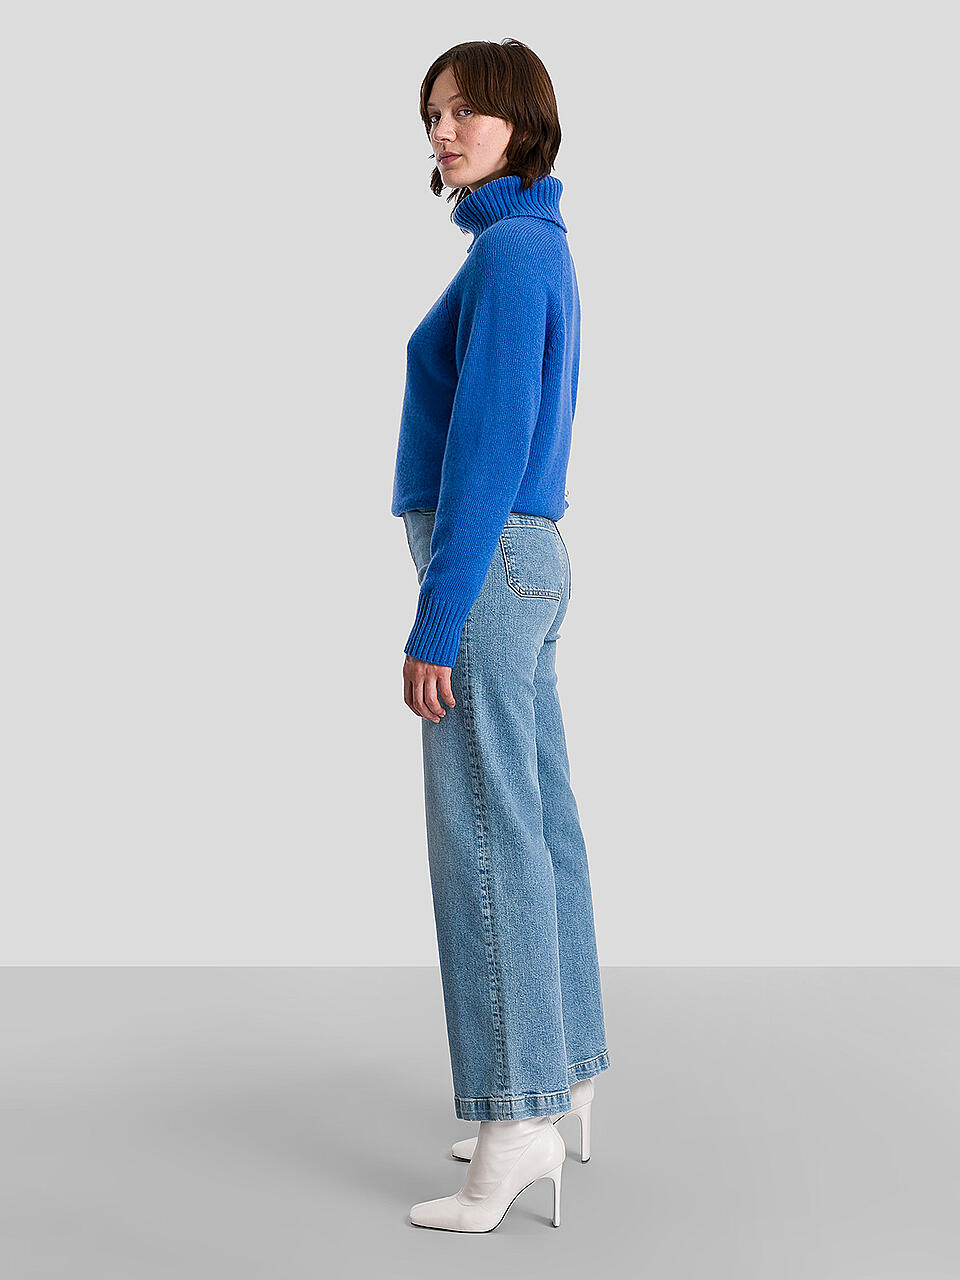 IVY OAK | Pullover KAMELA | blau